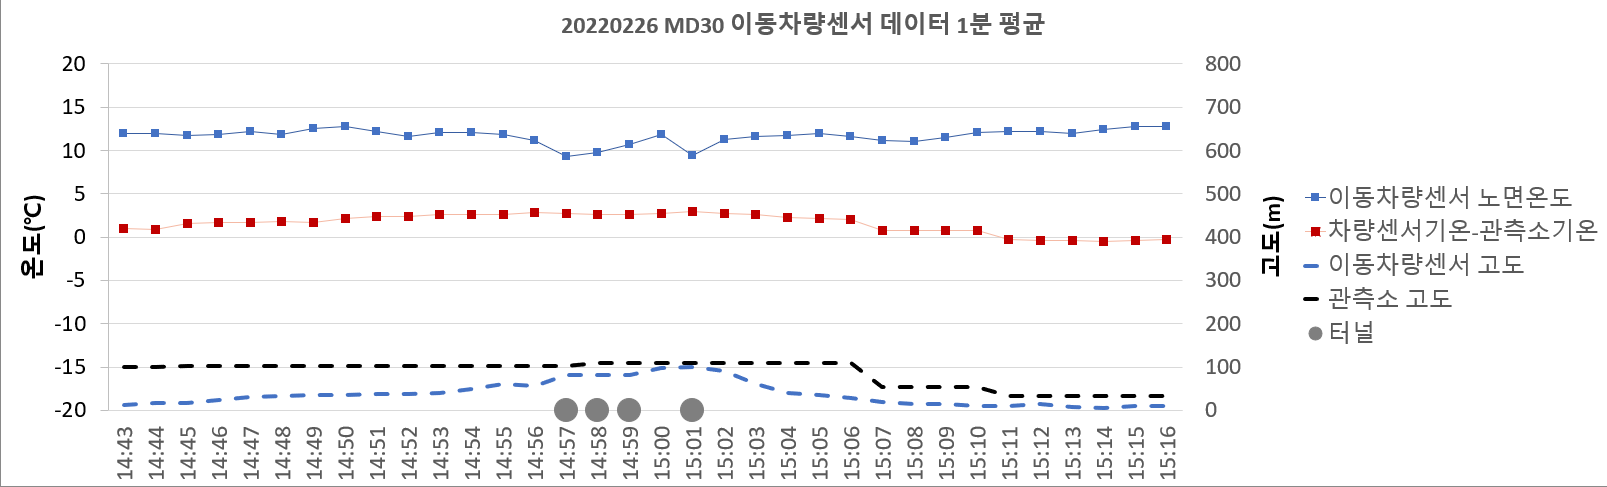 MD30센서-내부순환로 6번 데이터셋(2022/02/26 14:43-15:16)의 1분 평균자료의 시계열 그래프 출처: 저자 작성